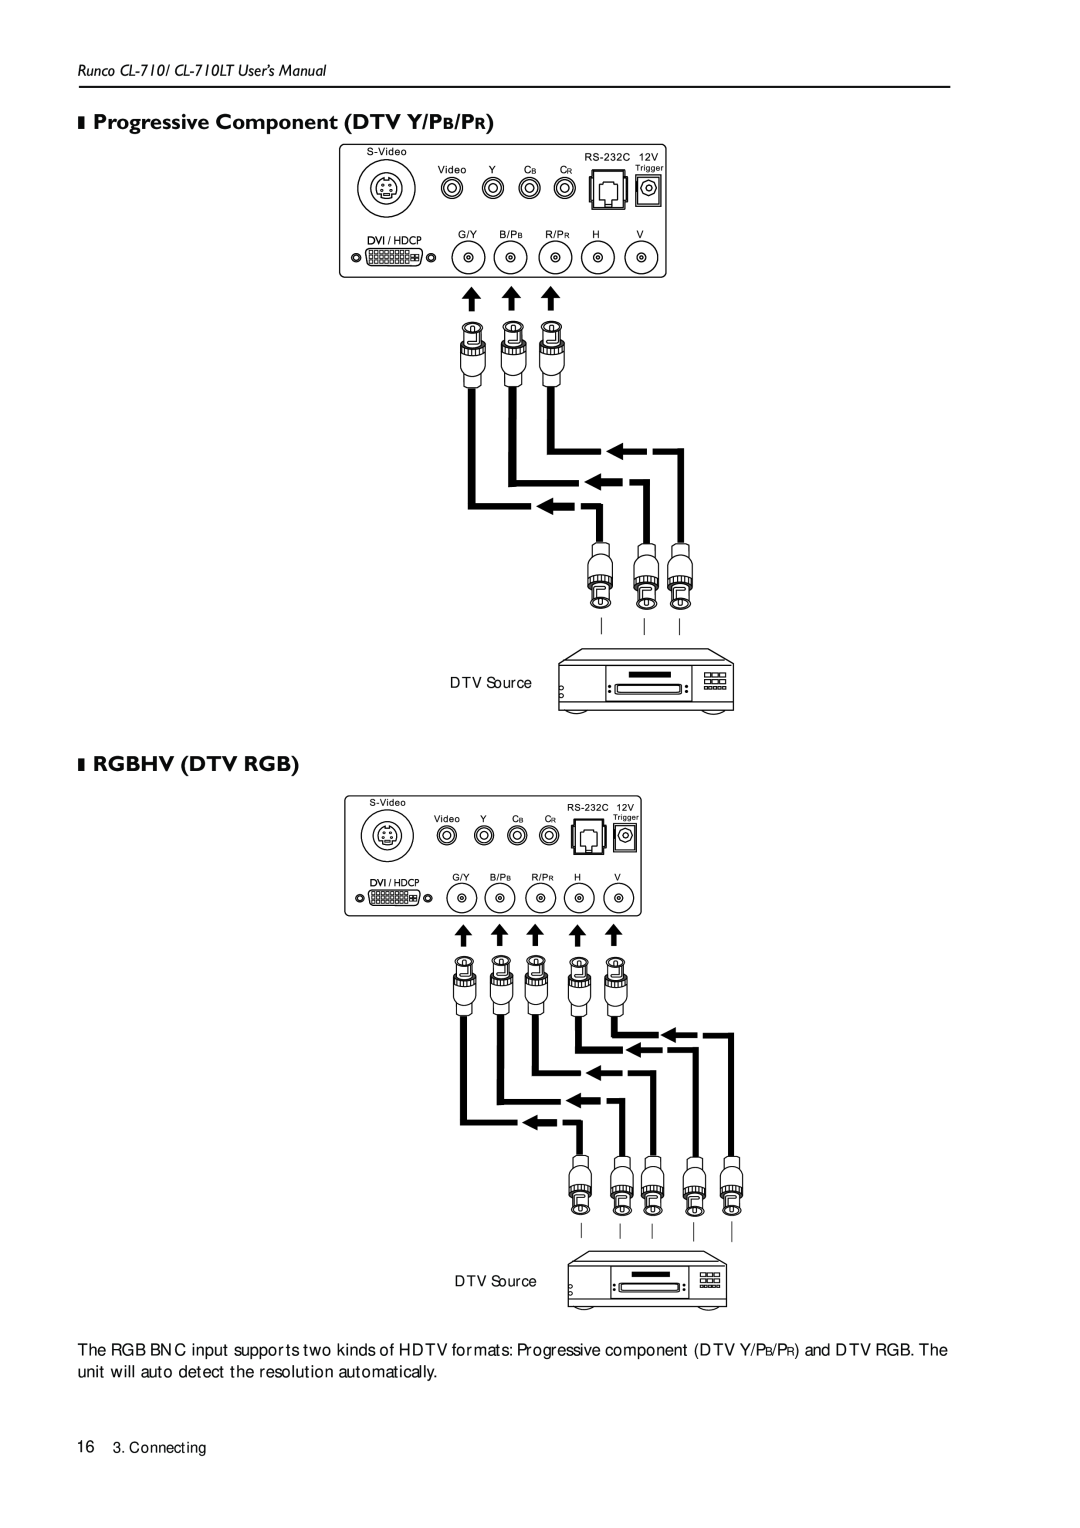 Runco CL-710LT, Reflection manual Progressive Component DTV Y/PB/PR, Rgbhv Dtv Rgb, DTV Source, Connecting 